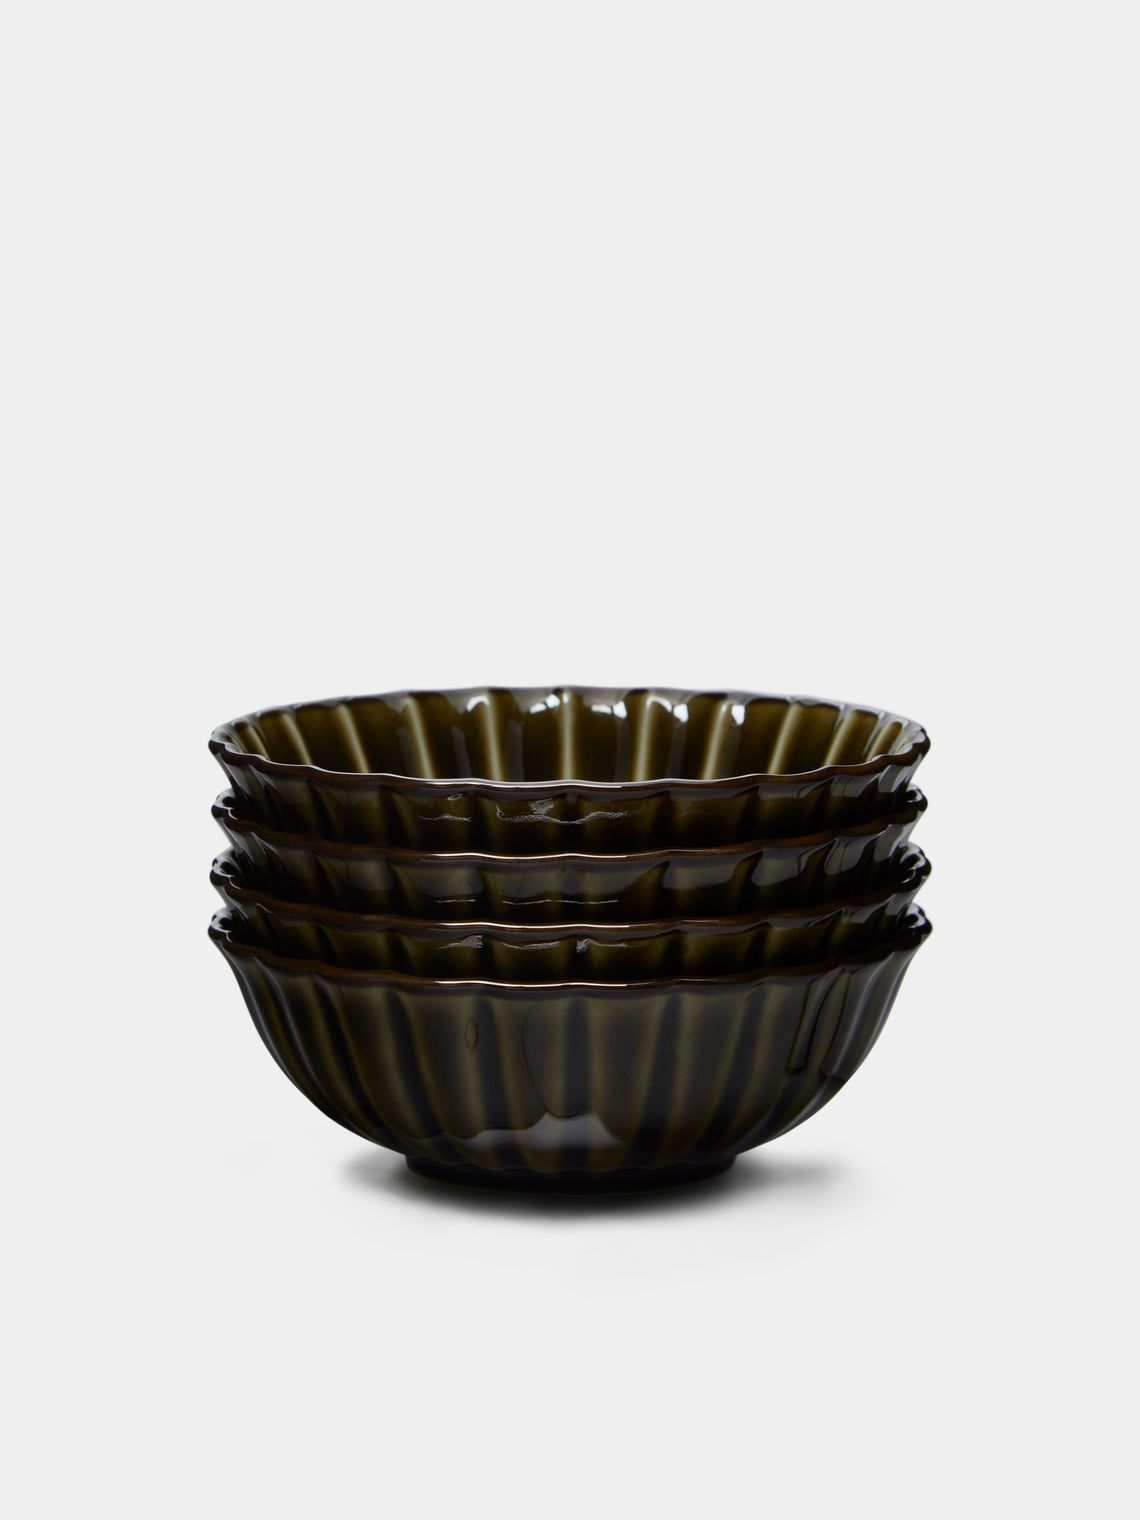 Kaneko Kohyo - Giyaman Urushi Ceramic Shallow Bowls (Set of 4) -  - ABASK